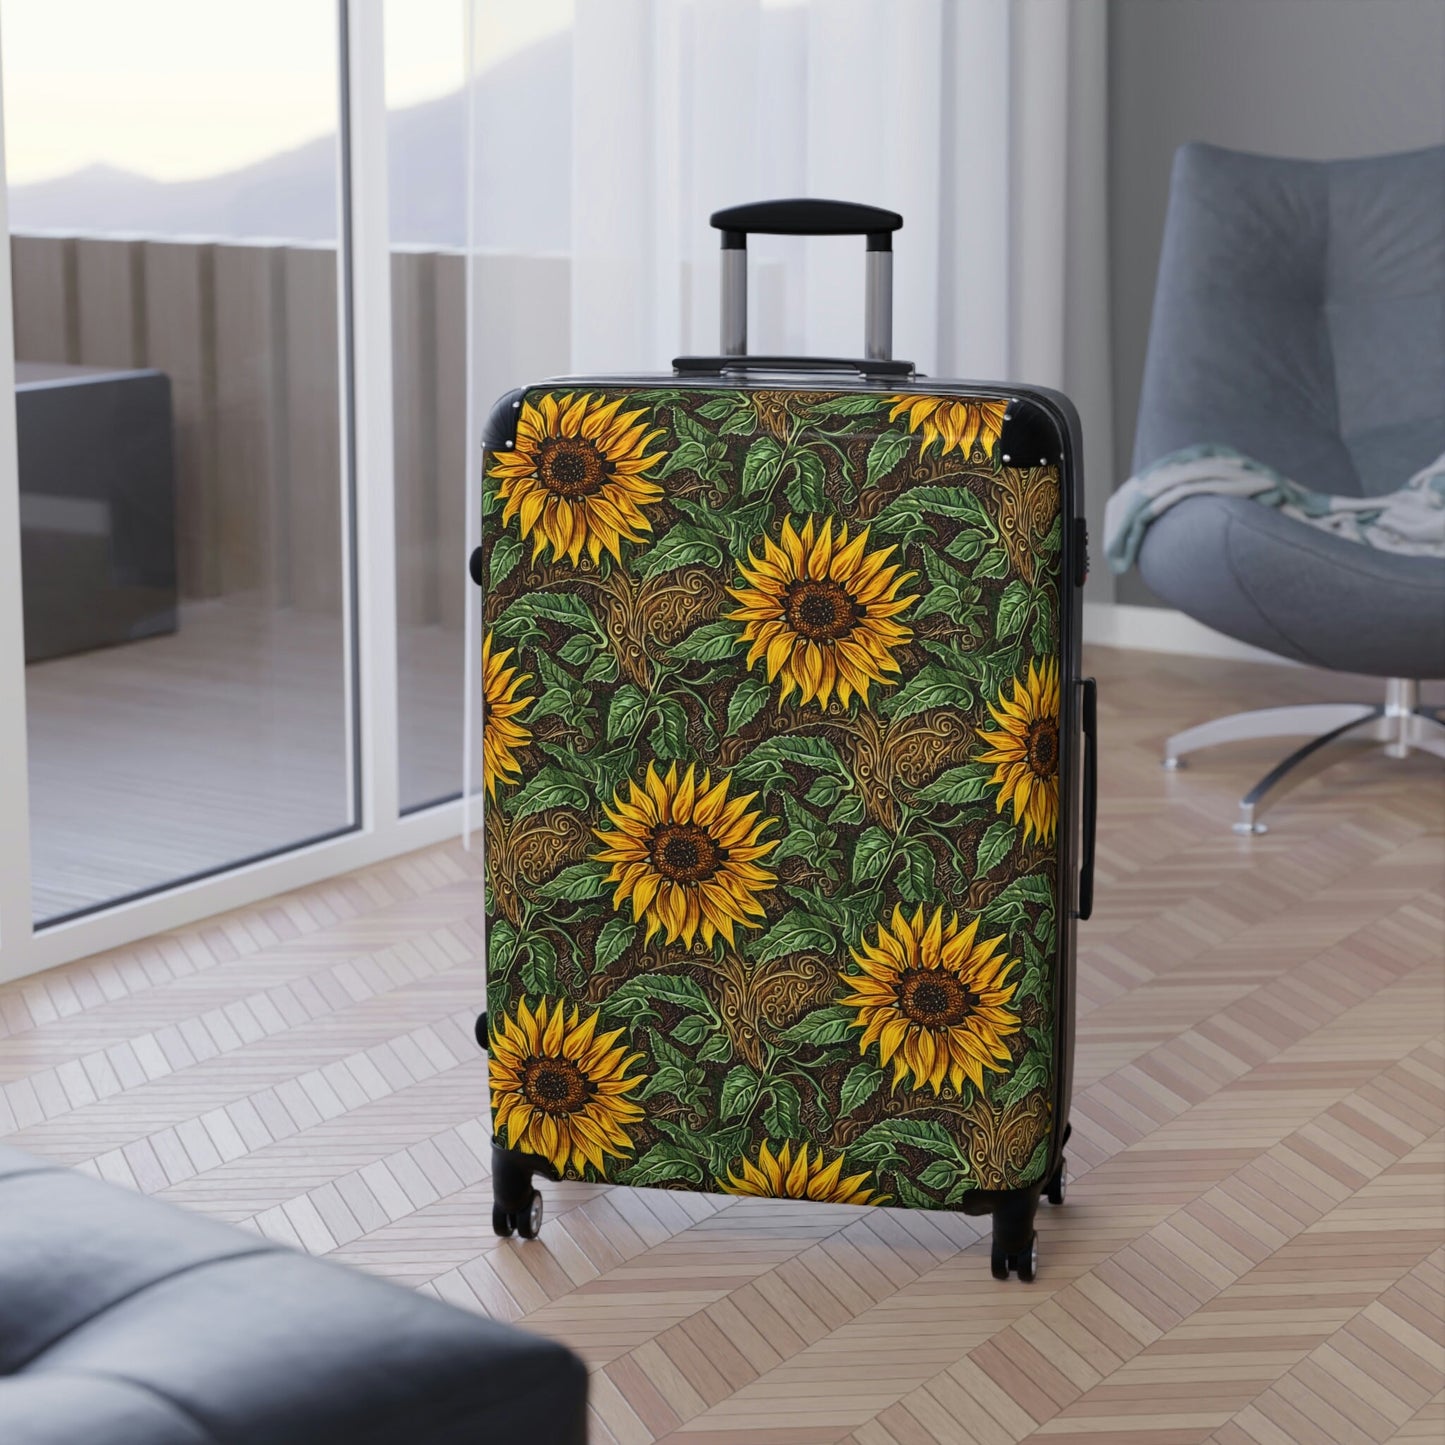 Suitcase, Ladies suitcase, women suitcase, women carryon, Sunflower suitcase, Sunflower luggage, Sunflower travel bag, Sunflower carryon